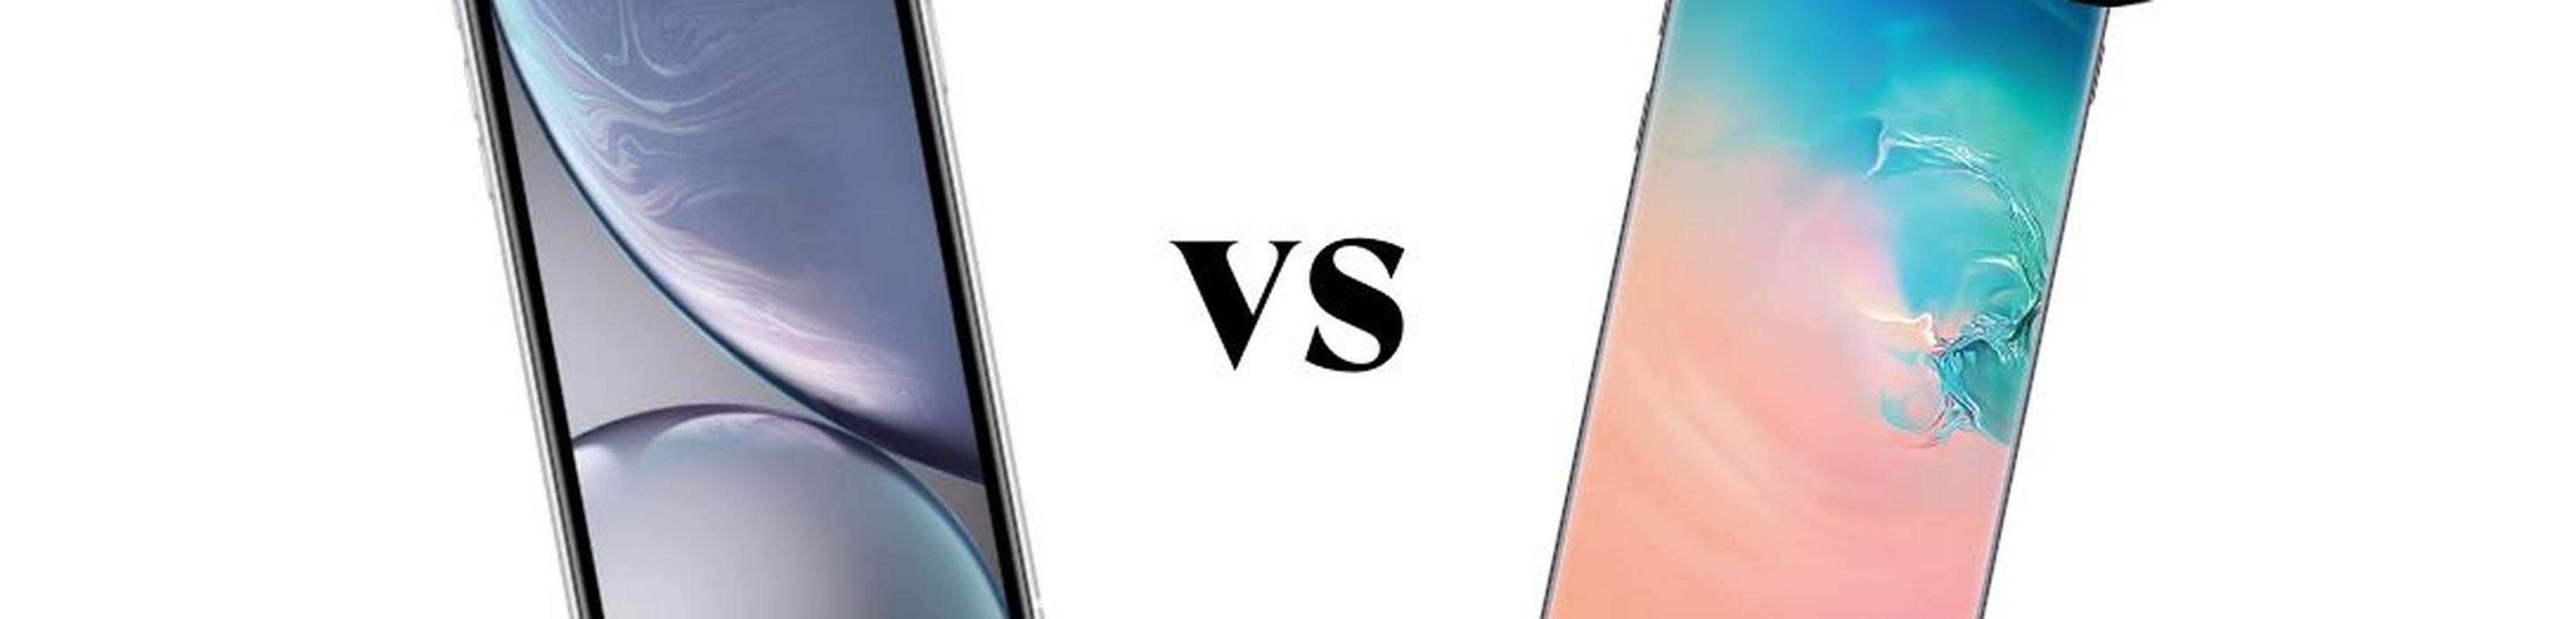 iphone-vs-samsung-banner